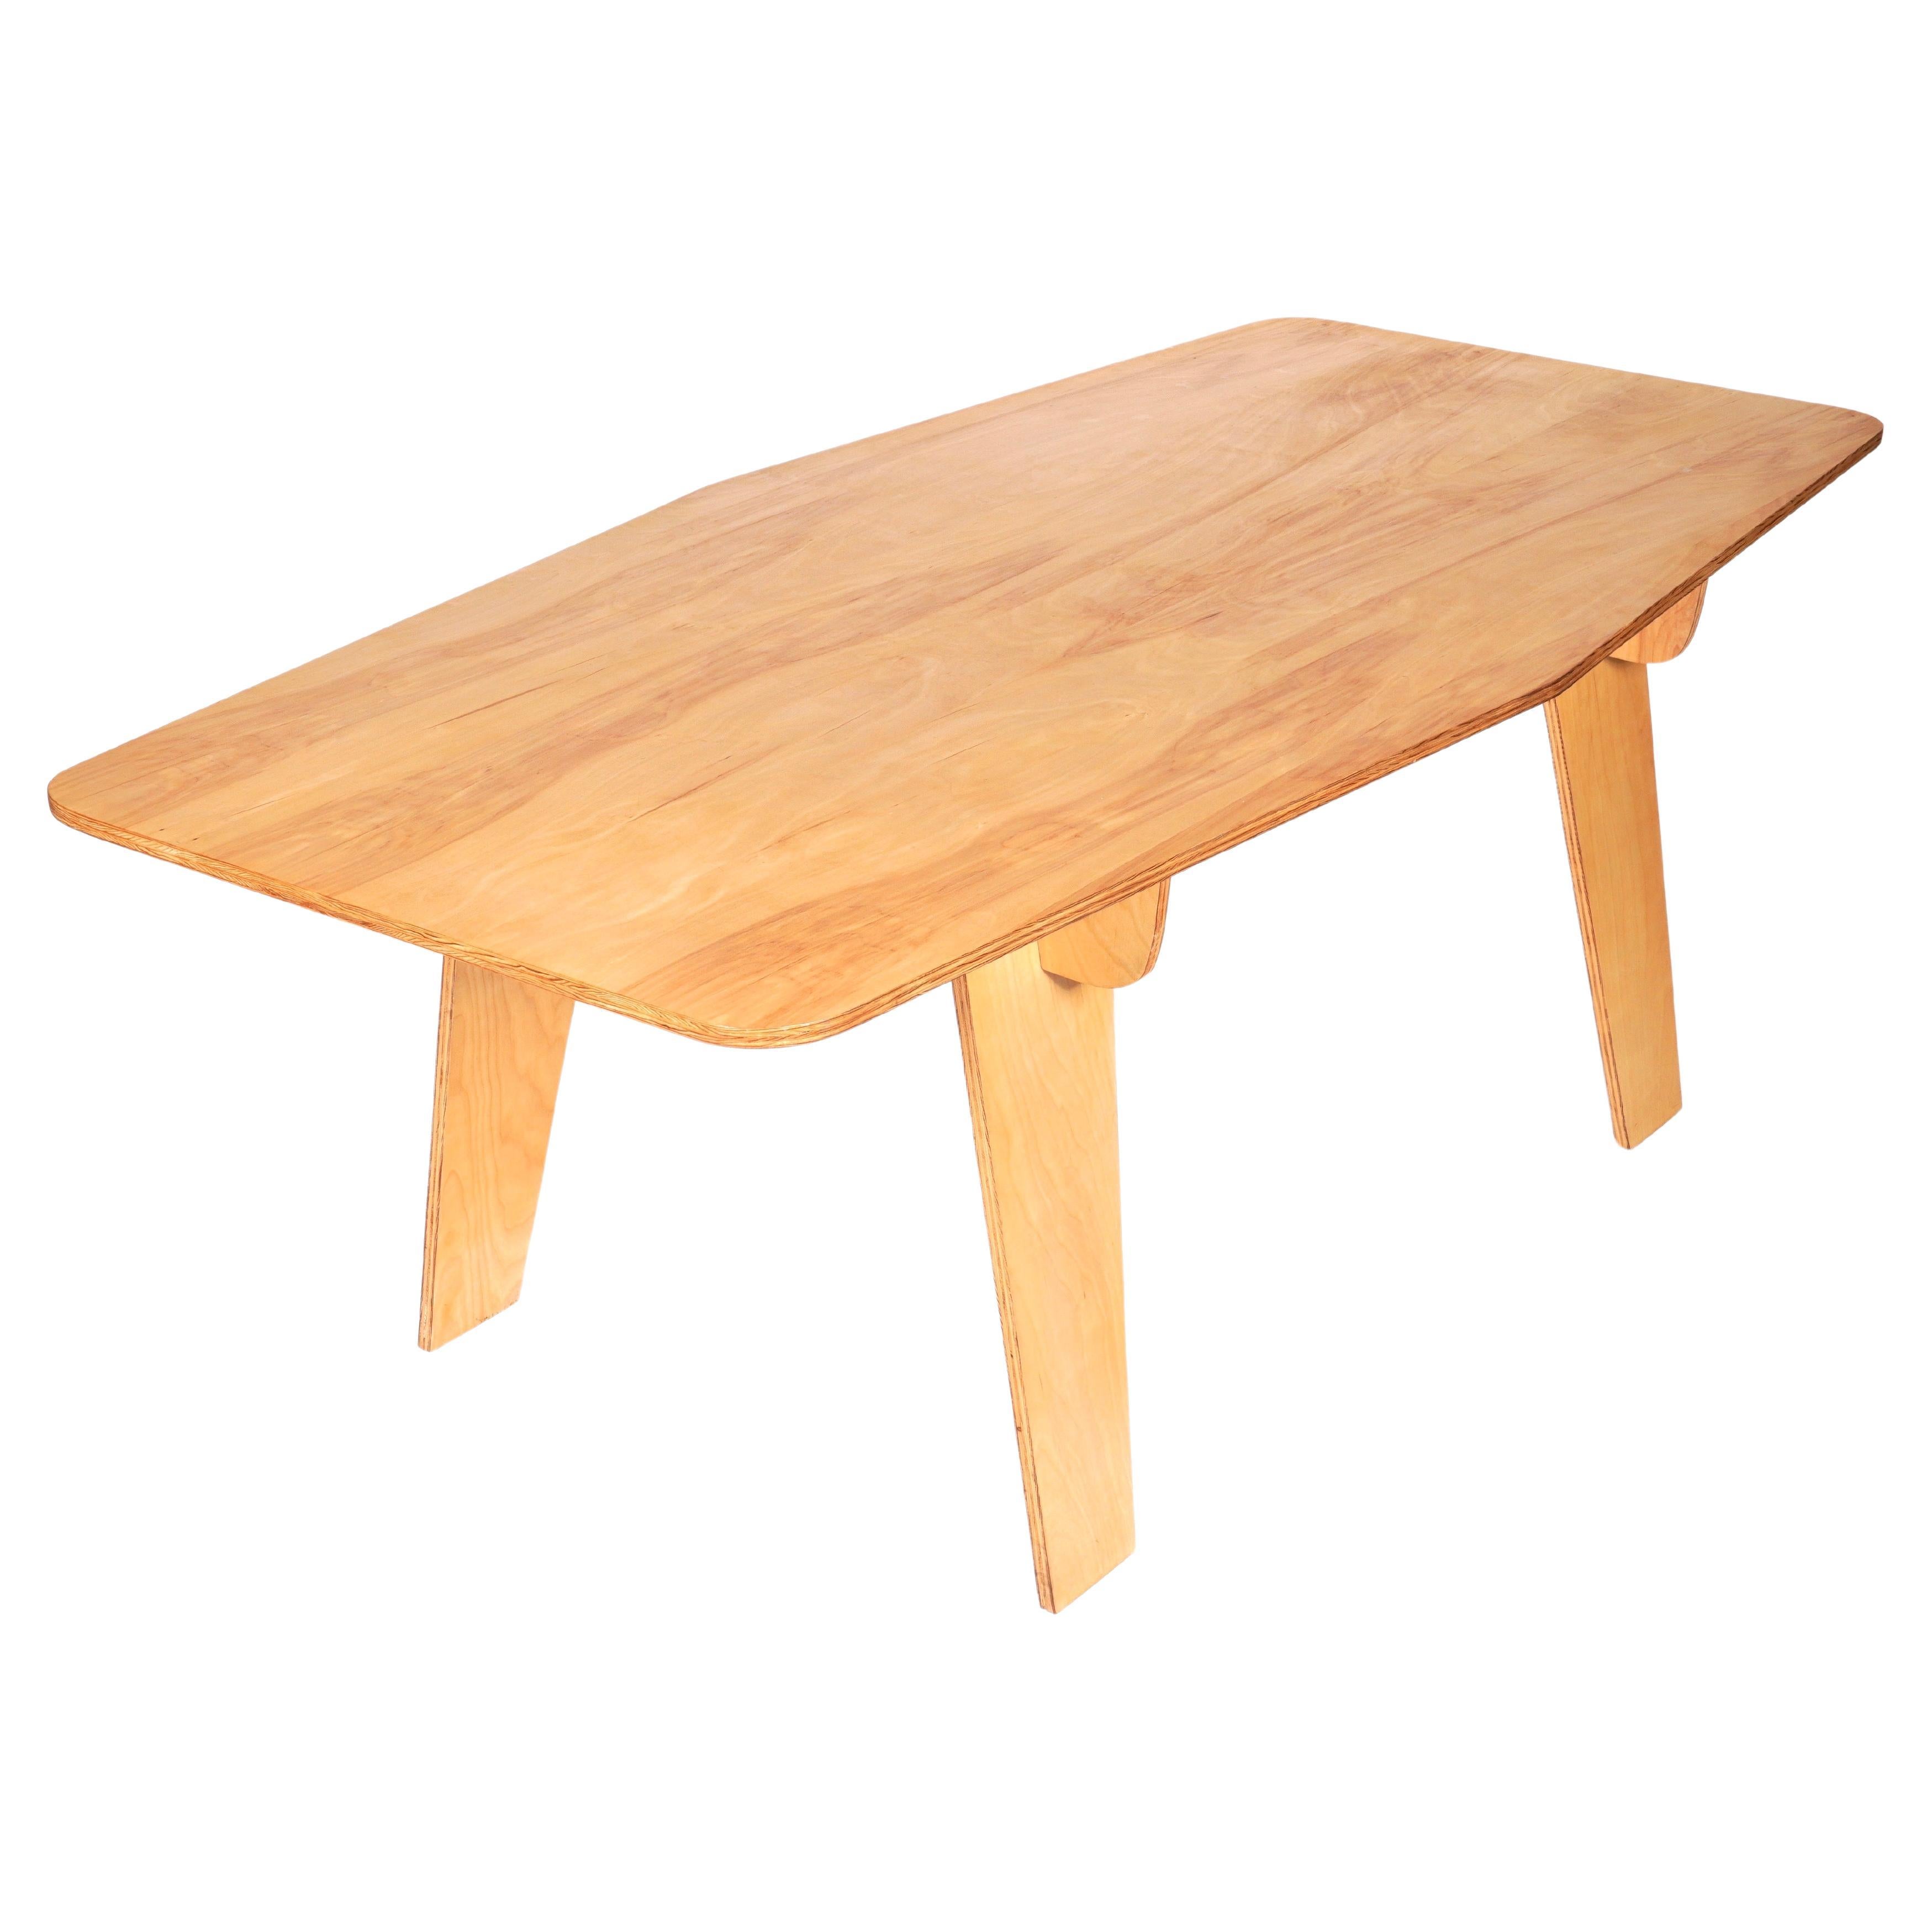 The "Interlock Table" Custom Plywood Table / The New Bauhaus Chicago 